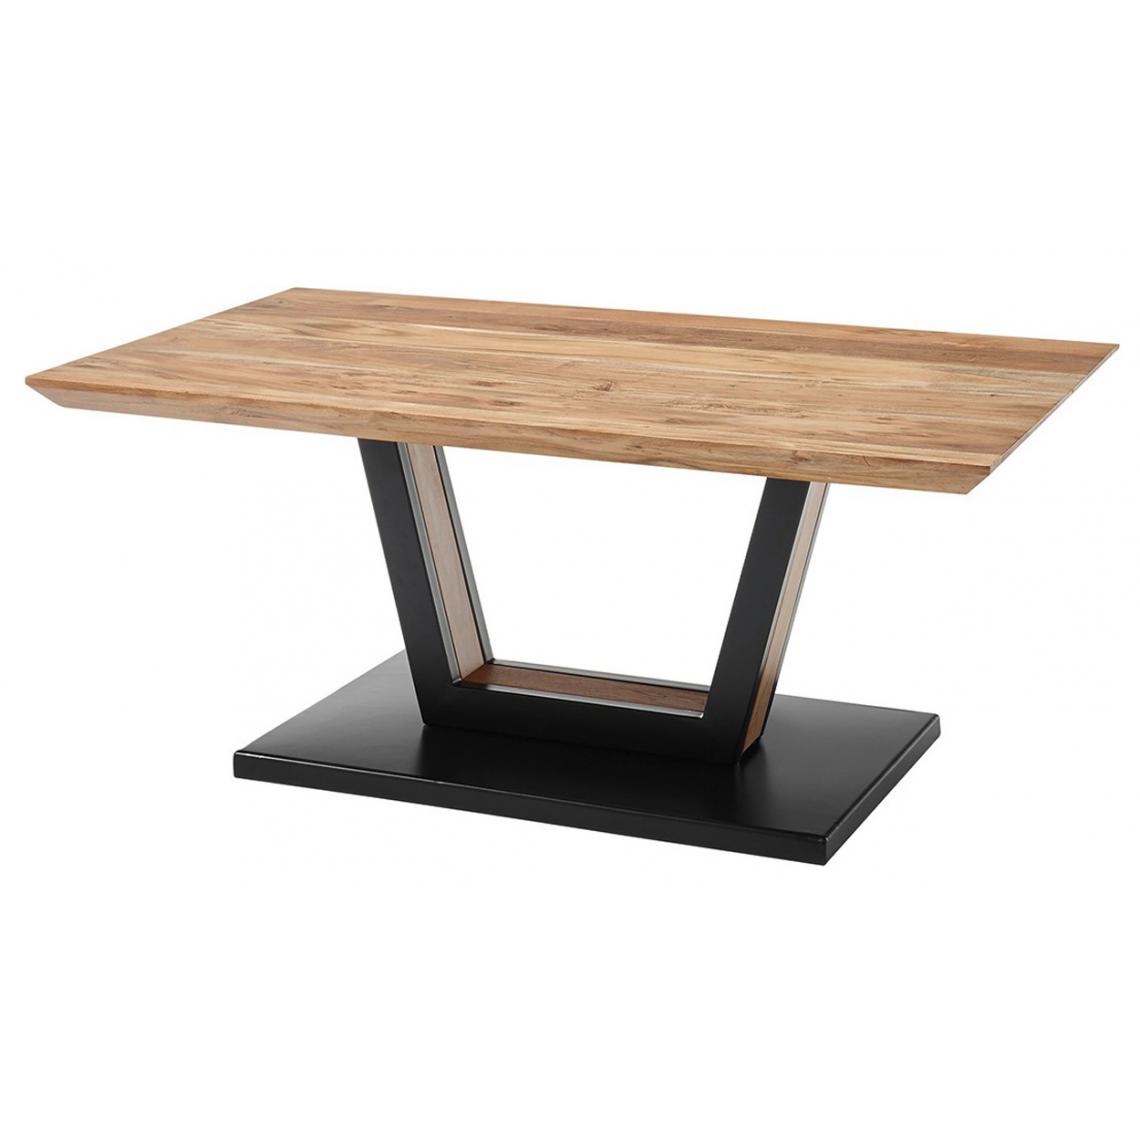 Pegane - Table basse rectangulaire en acacia massif coloris naturel - L.110 x H.45 x P.70 cm - Tables basses